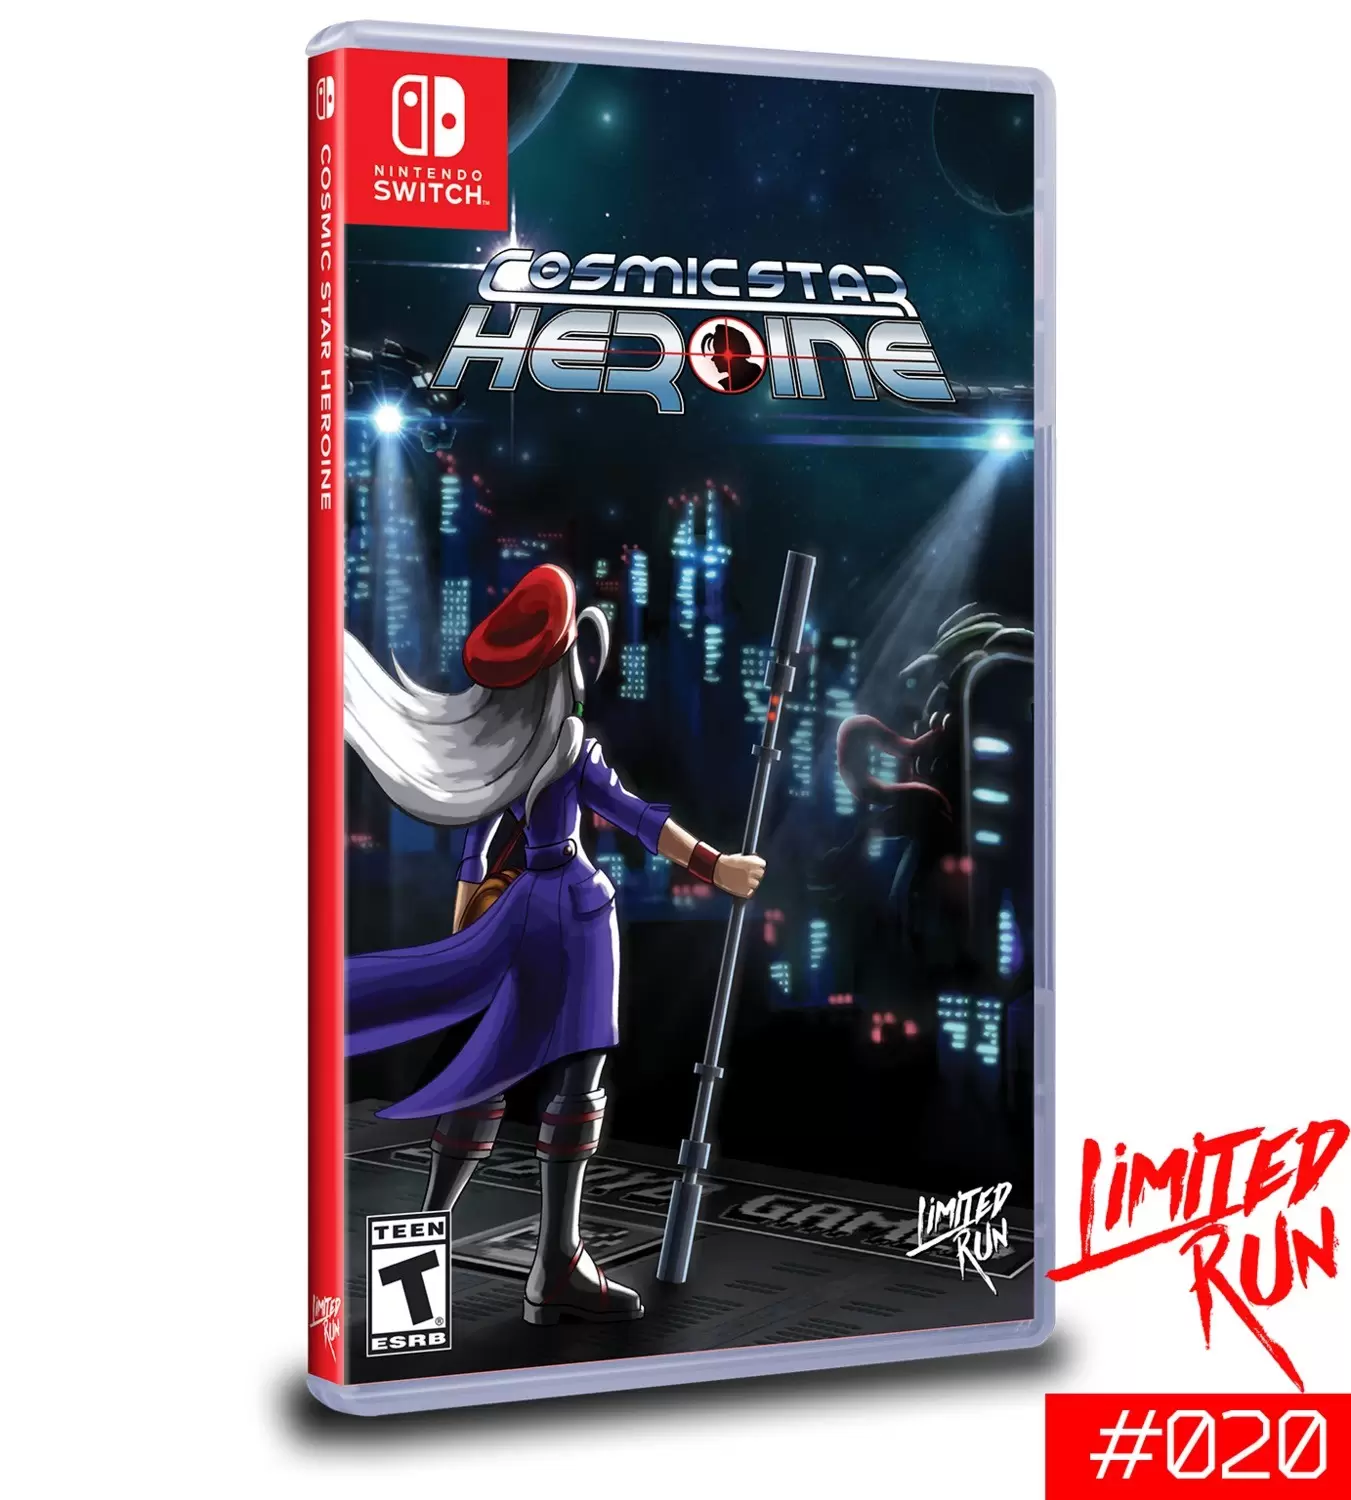 Nintendo Switch Games - Cosmic Star Heroine